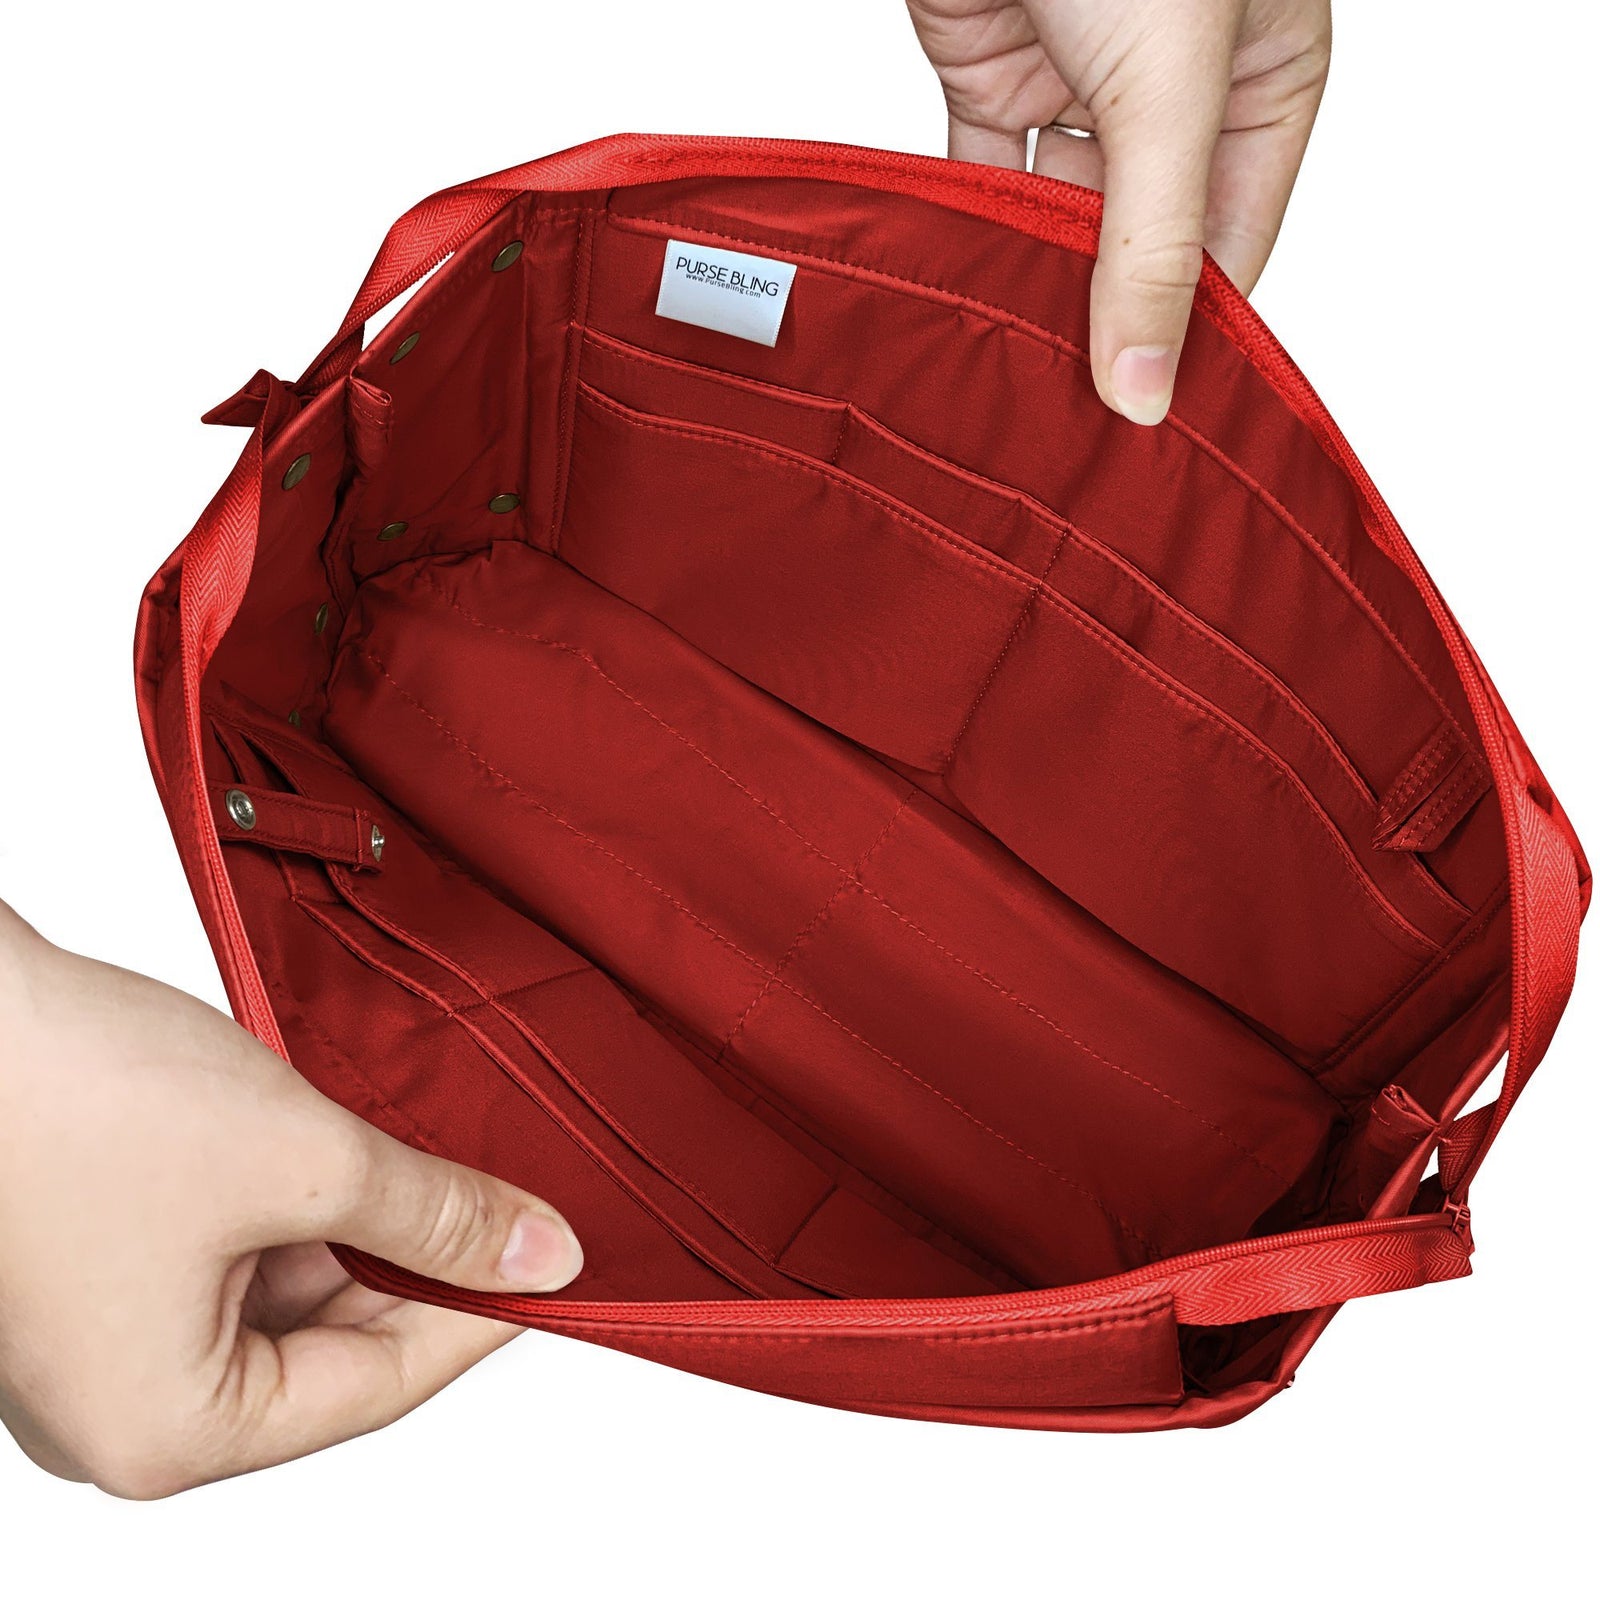 HyFanStr Felt Insert Bag Organizer with Zipper, Small Handbag Purse  Organizer To | eBay